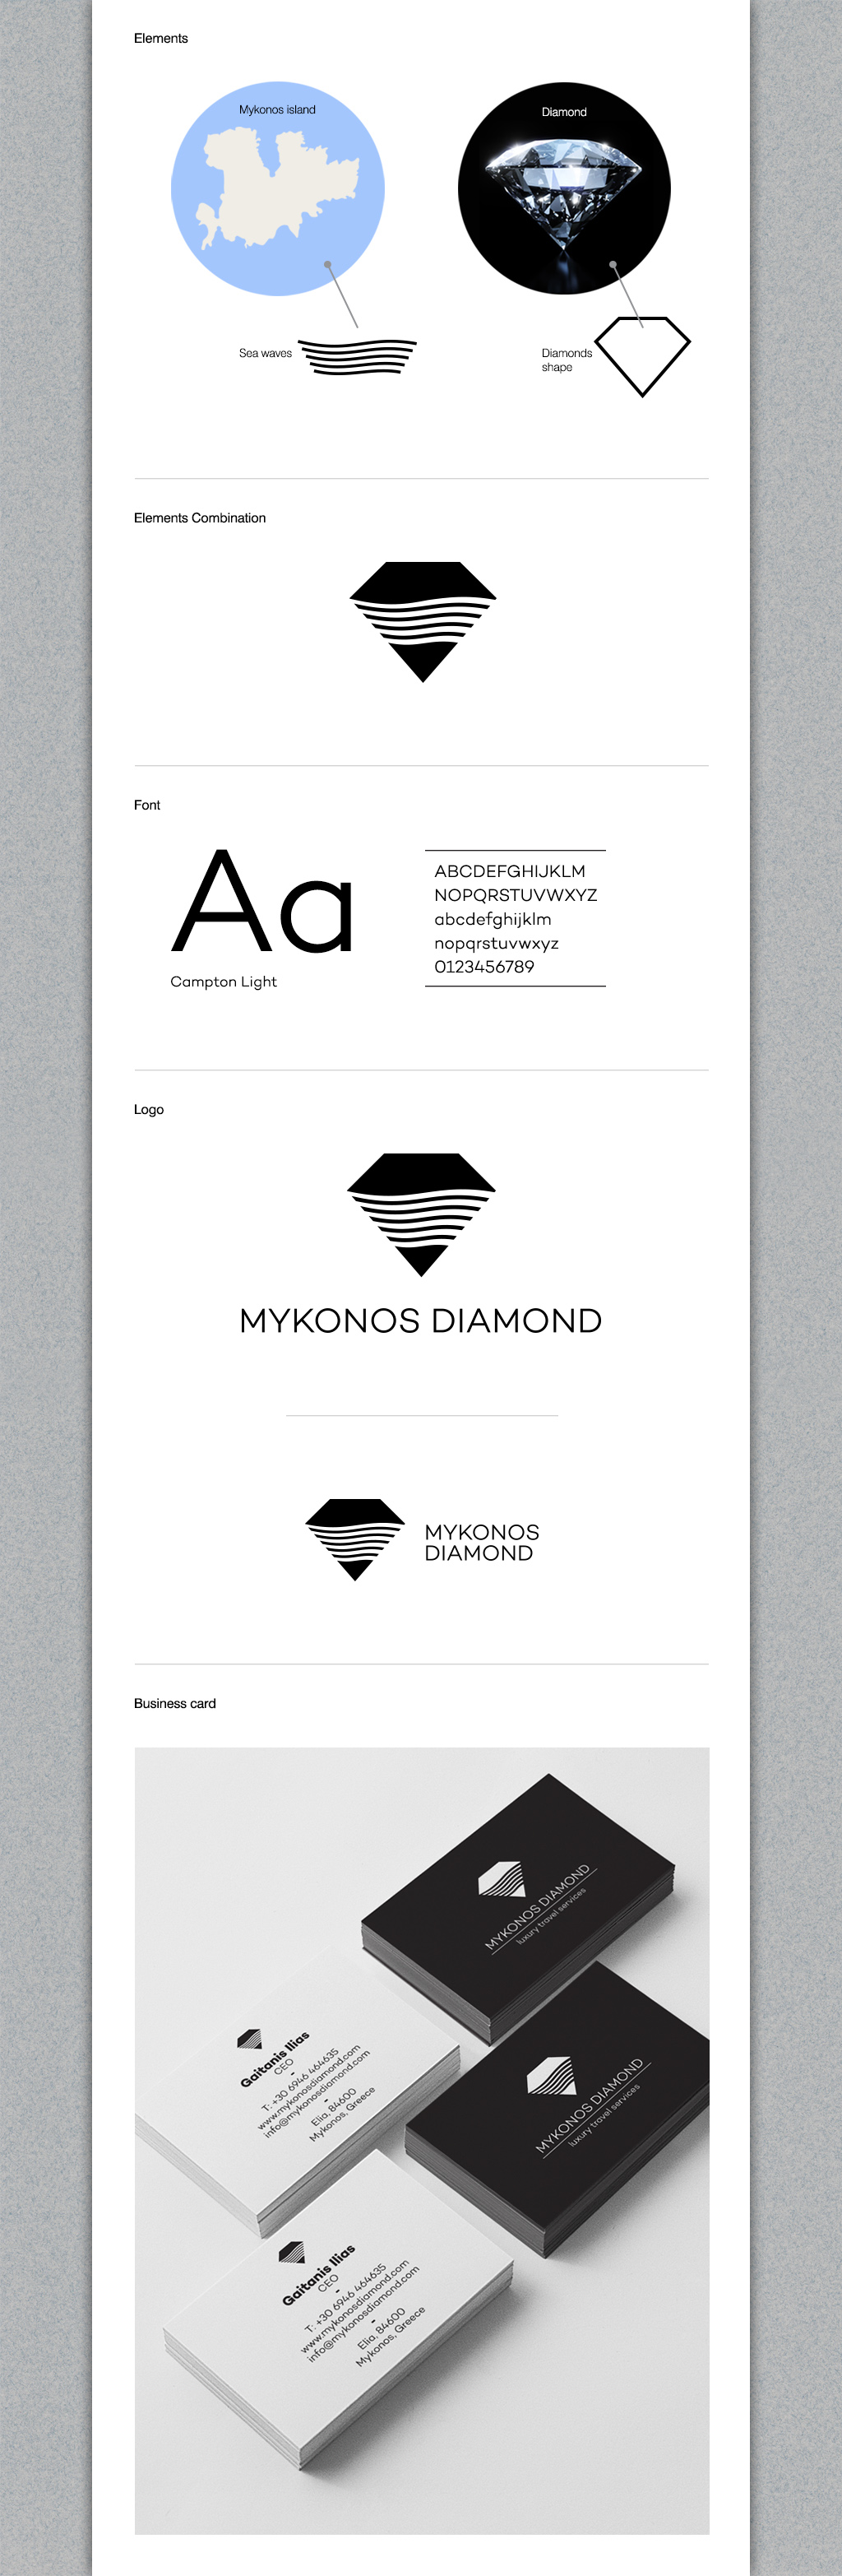 Mykonos Diamond logo presentation